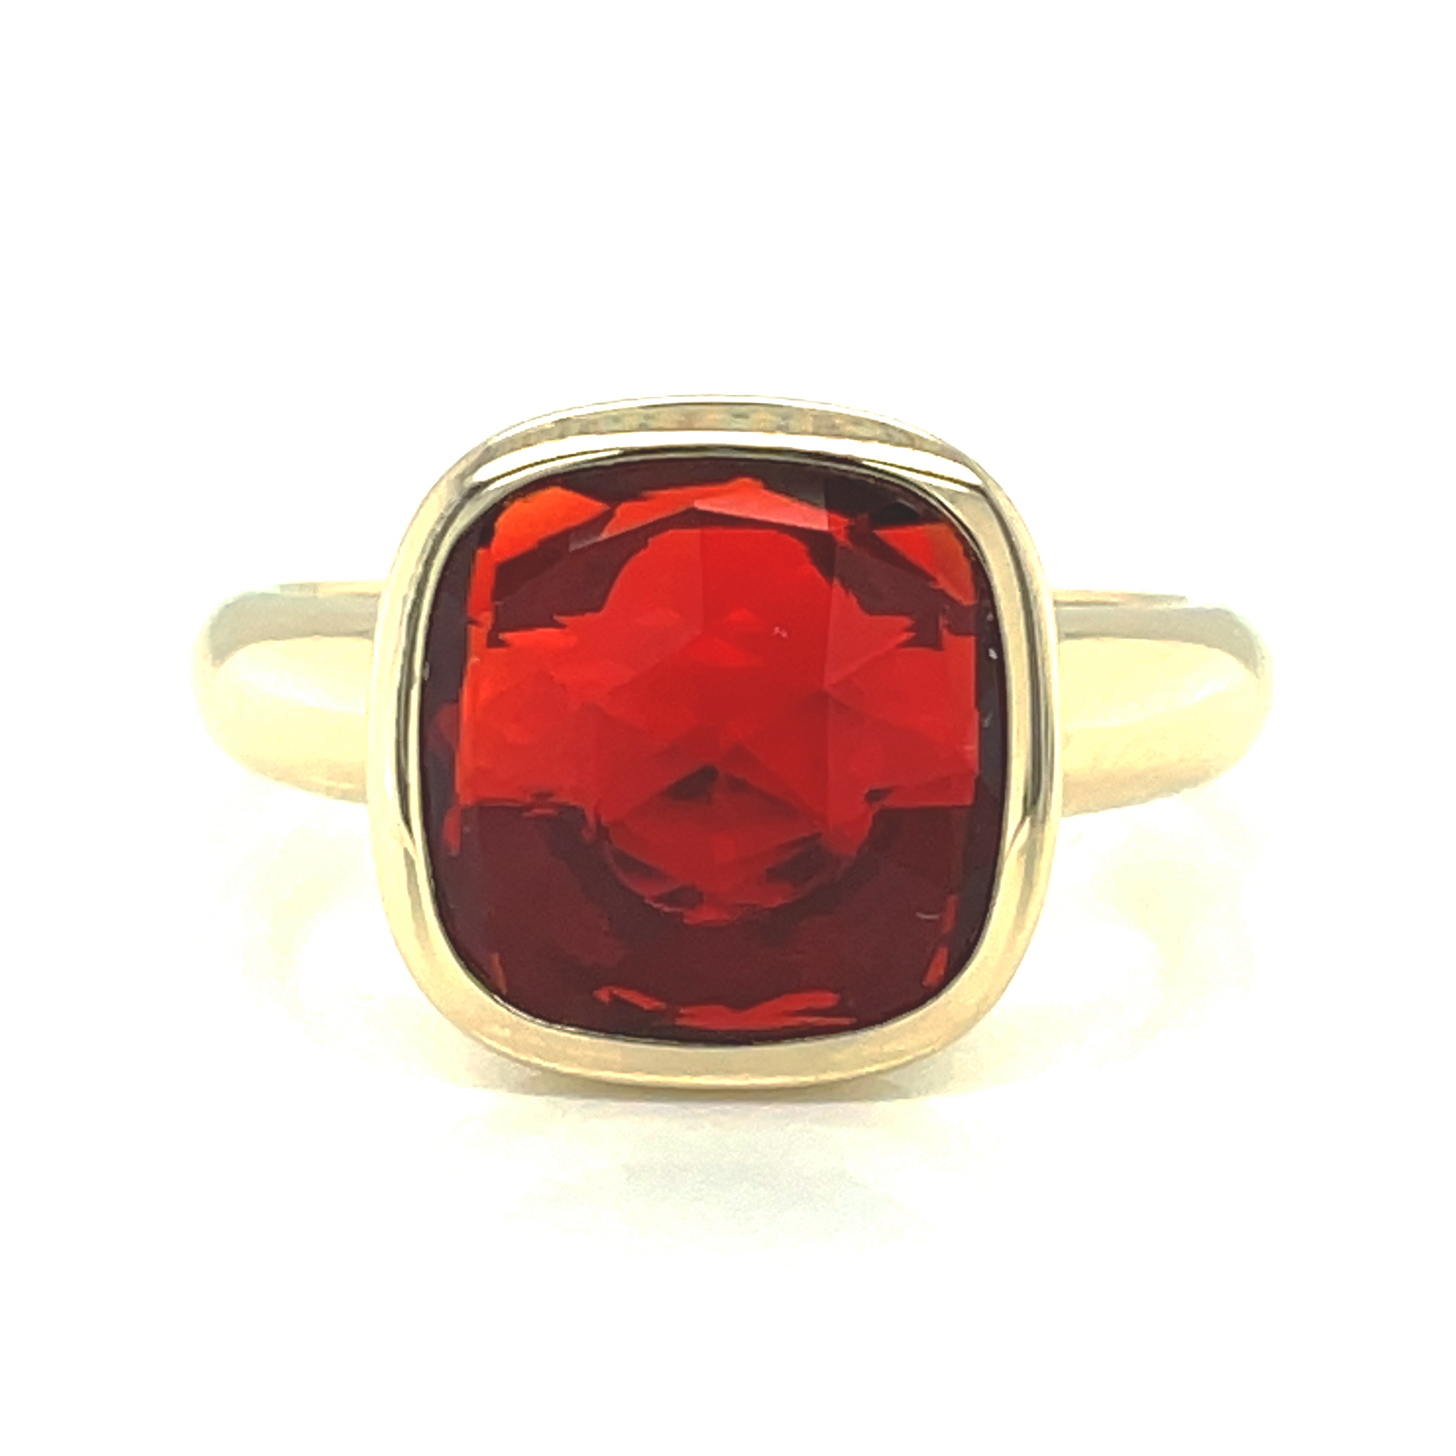 Cherryopal, rot/orange, antik facettiert, ca. 2,400 ct. Edelstein Ring Gelbgold 585/000 Sogni d´oro Terra Opalis